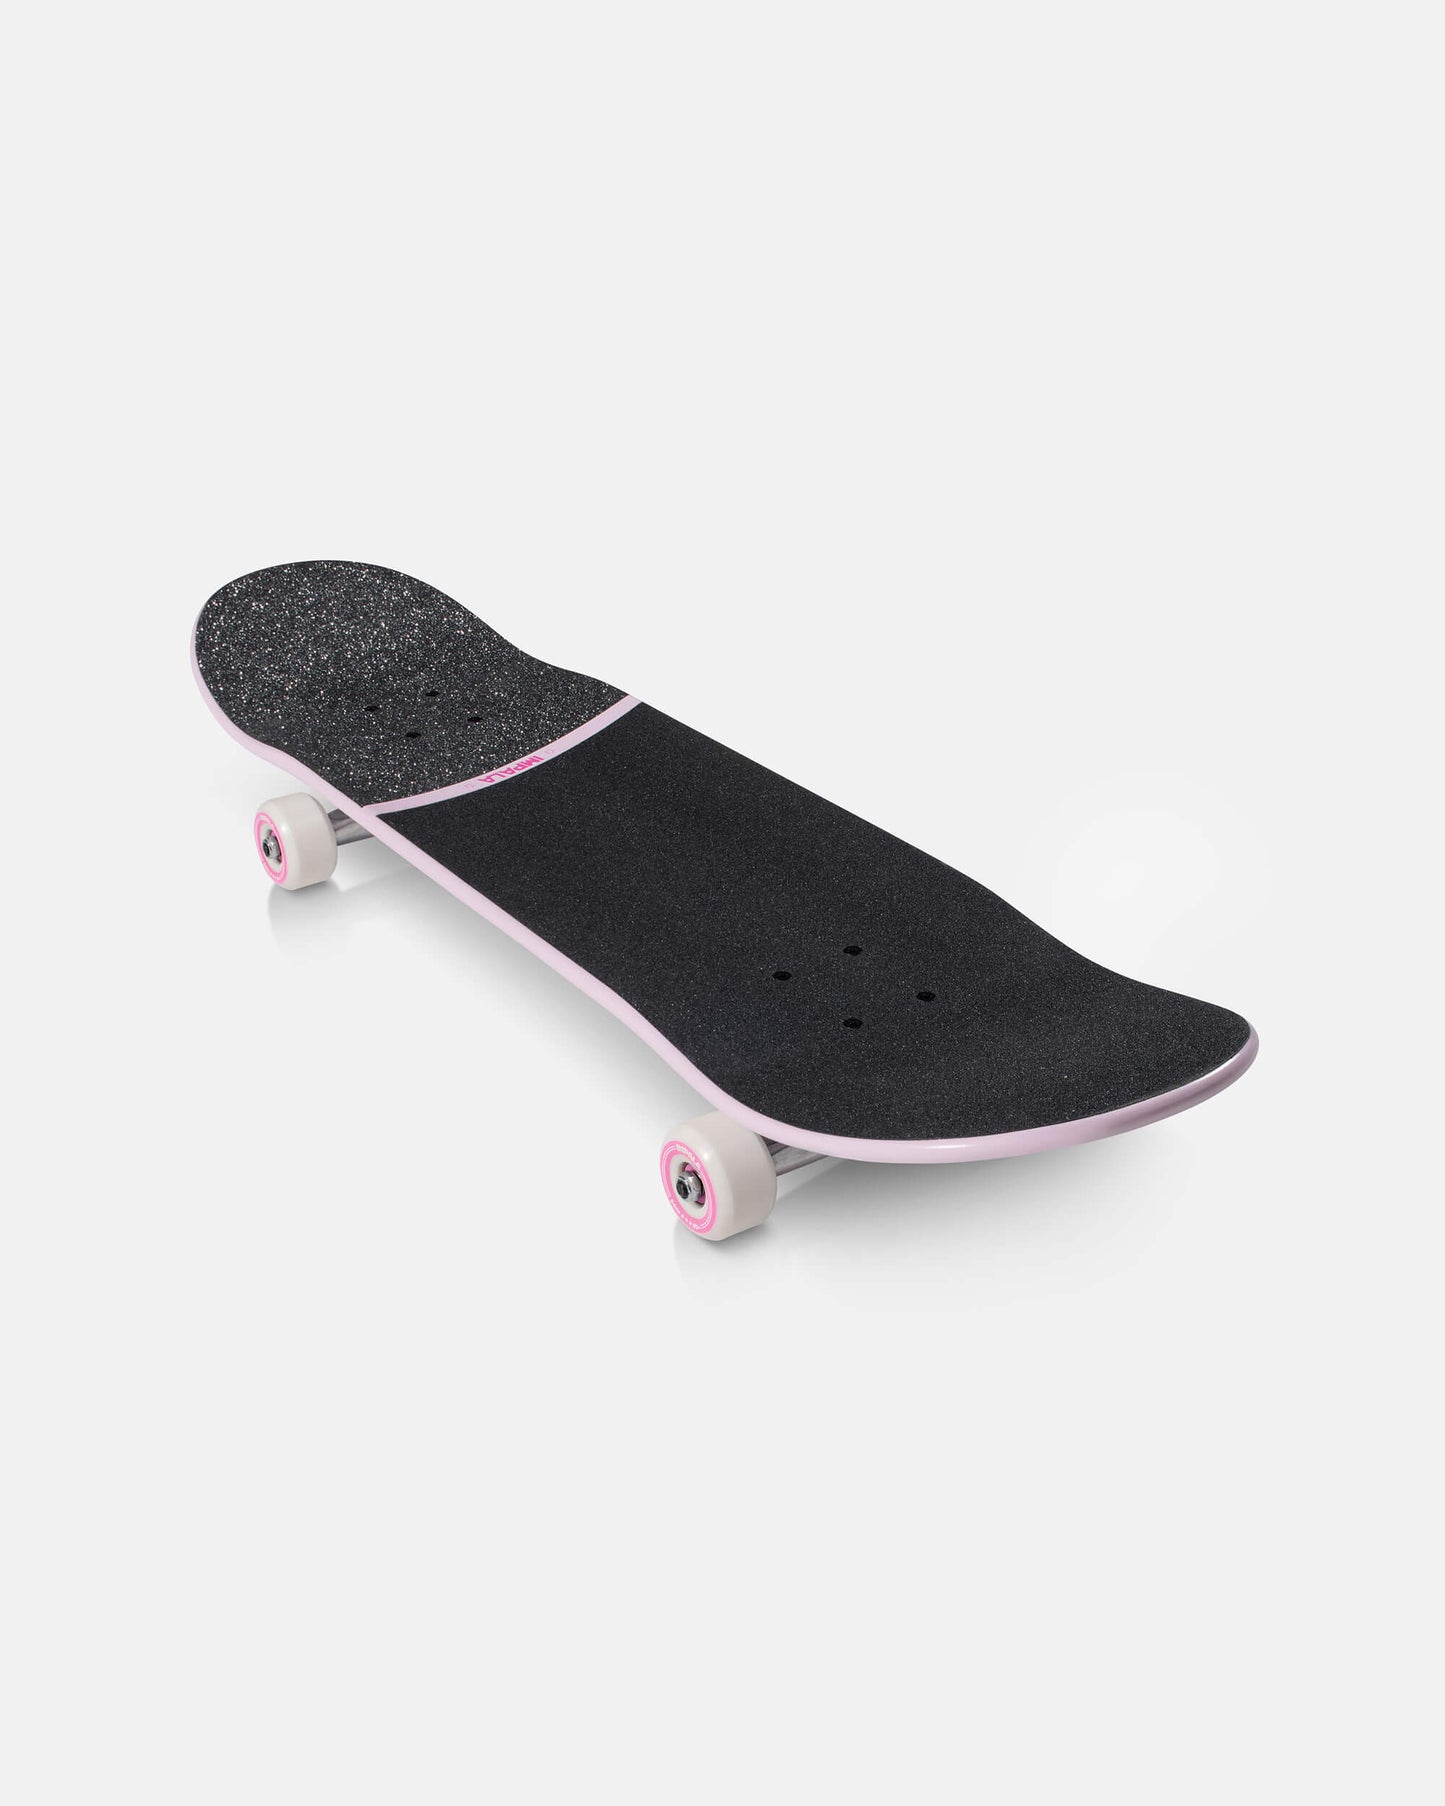 Impala Skateboards Impala Cosmos Skateboard - Pink 8.25" in Pink